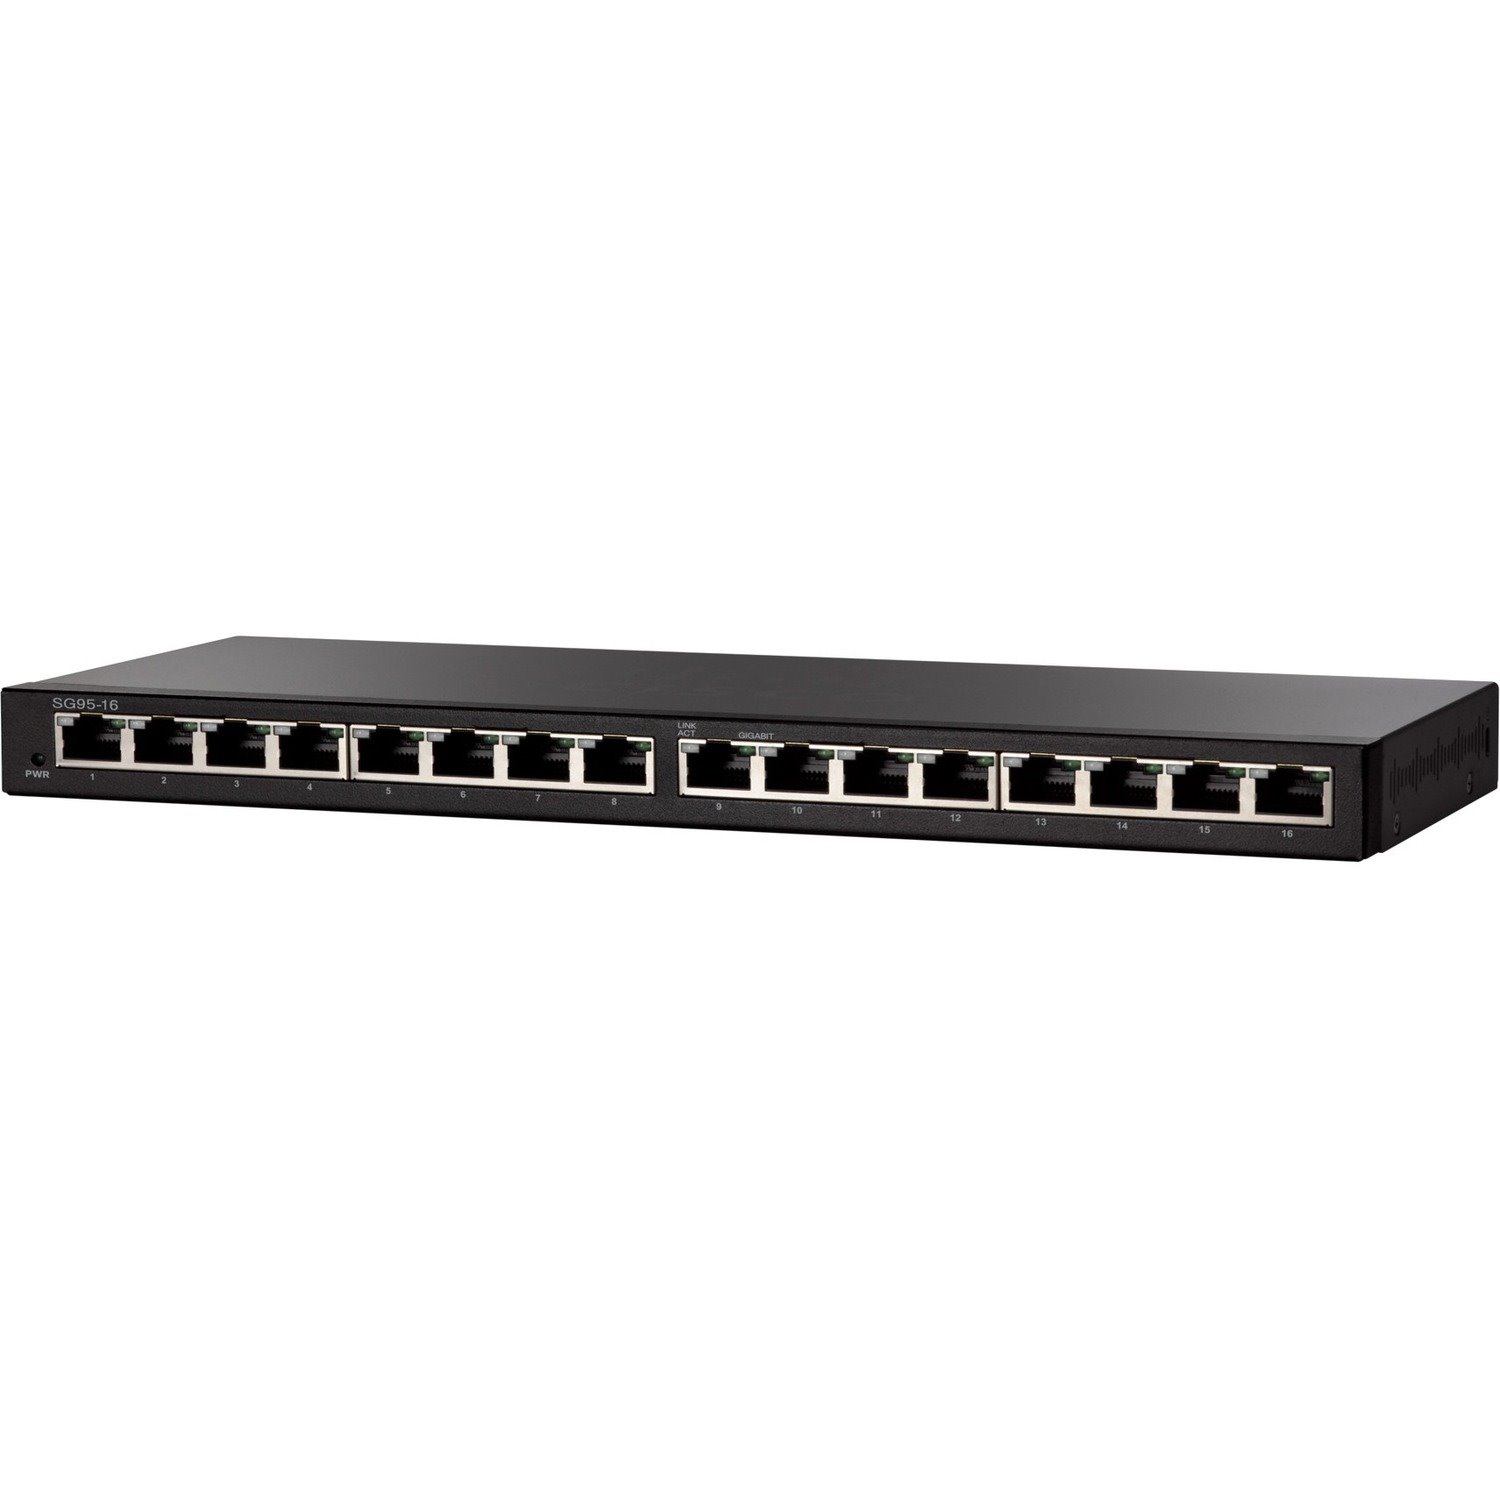 Cisco SG95-16 16-Port Gigabit Desktop Switch